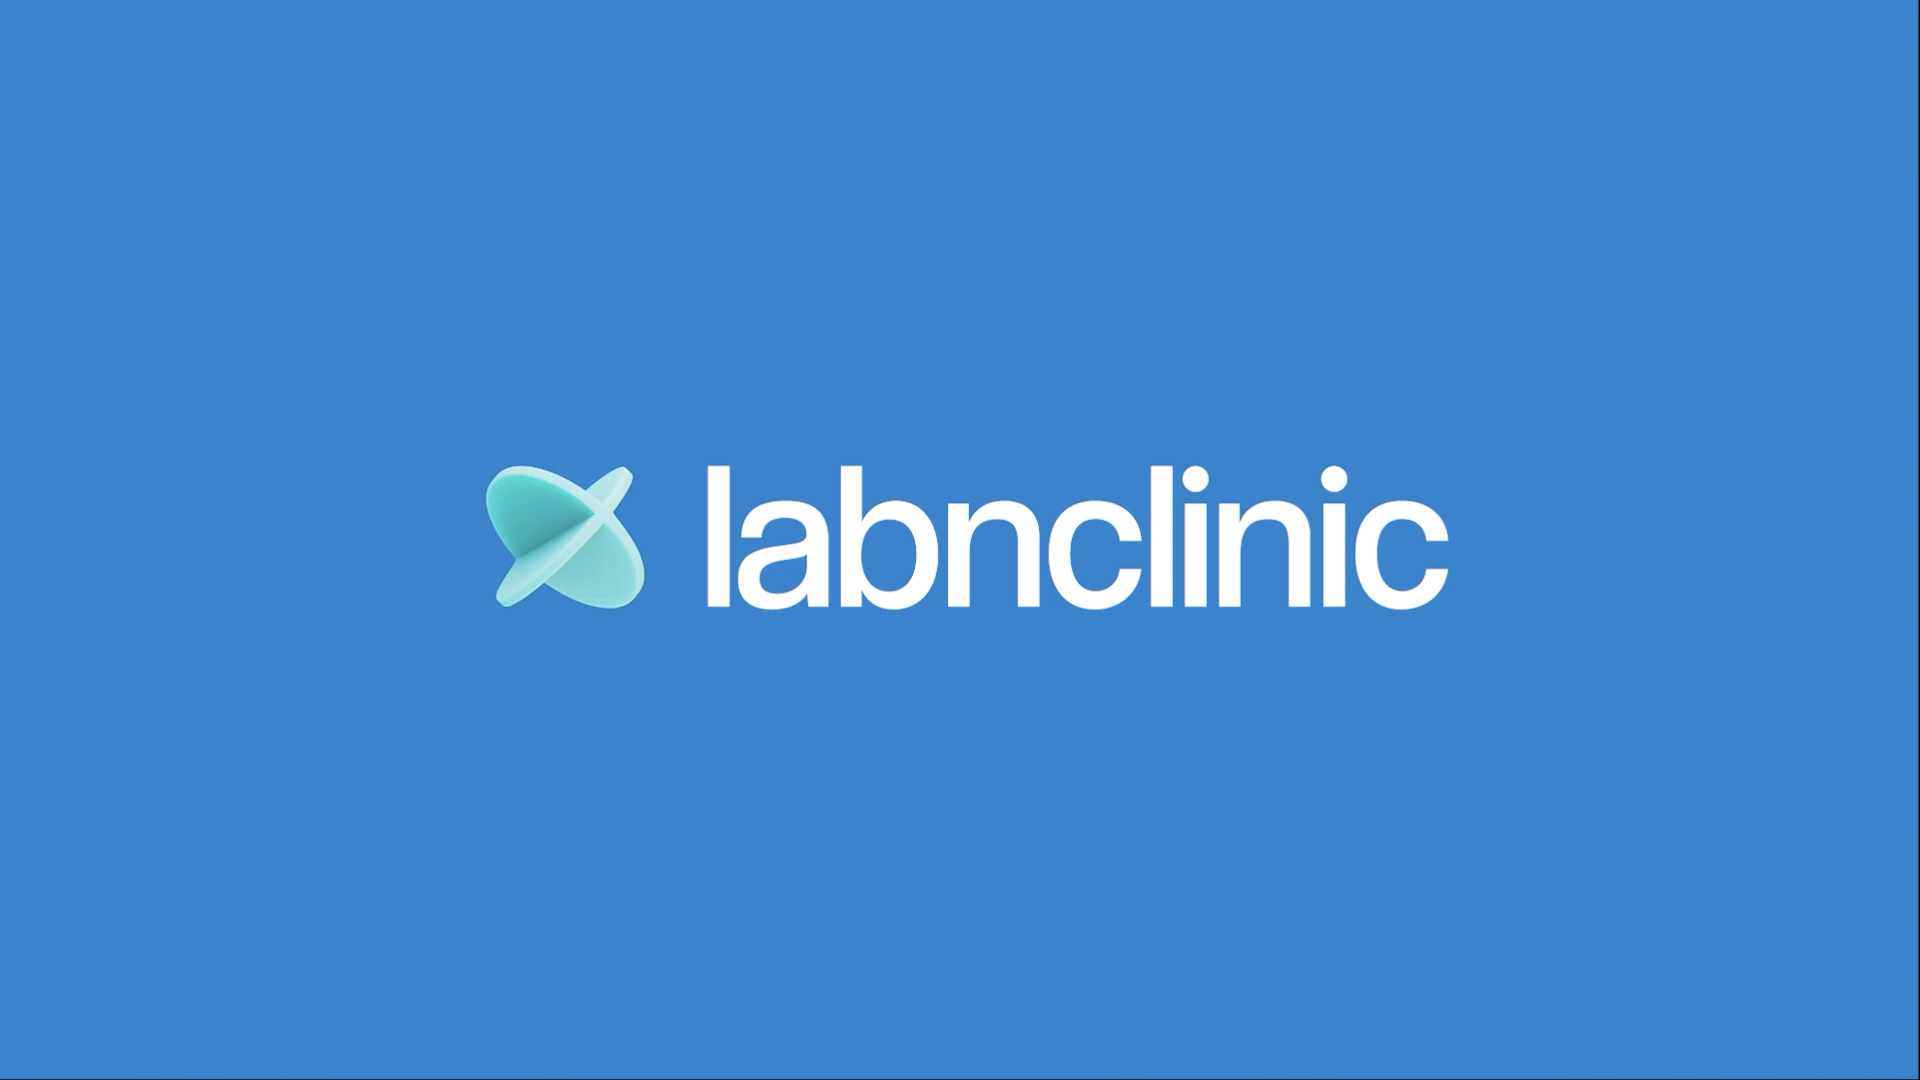 Alina Vasileva Creates Concept for Labnclinic’s Brand with Molecular Design